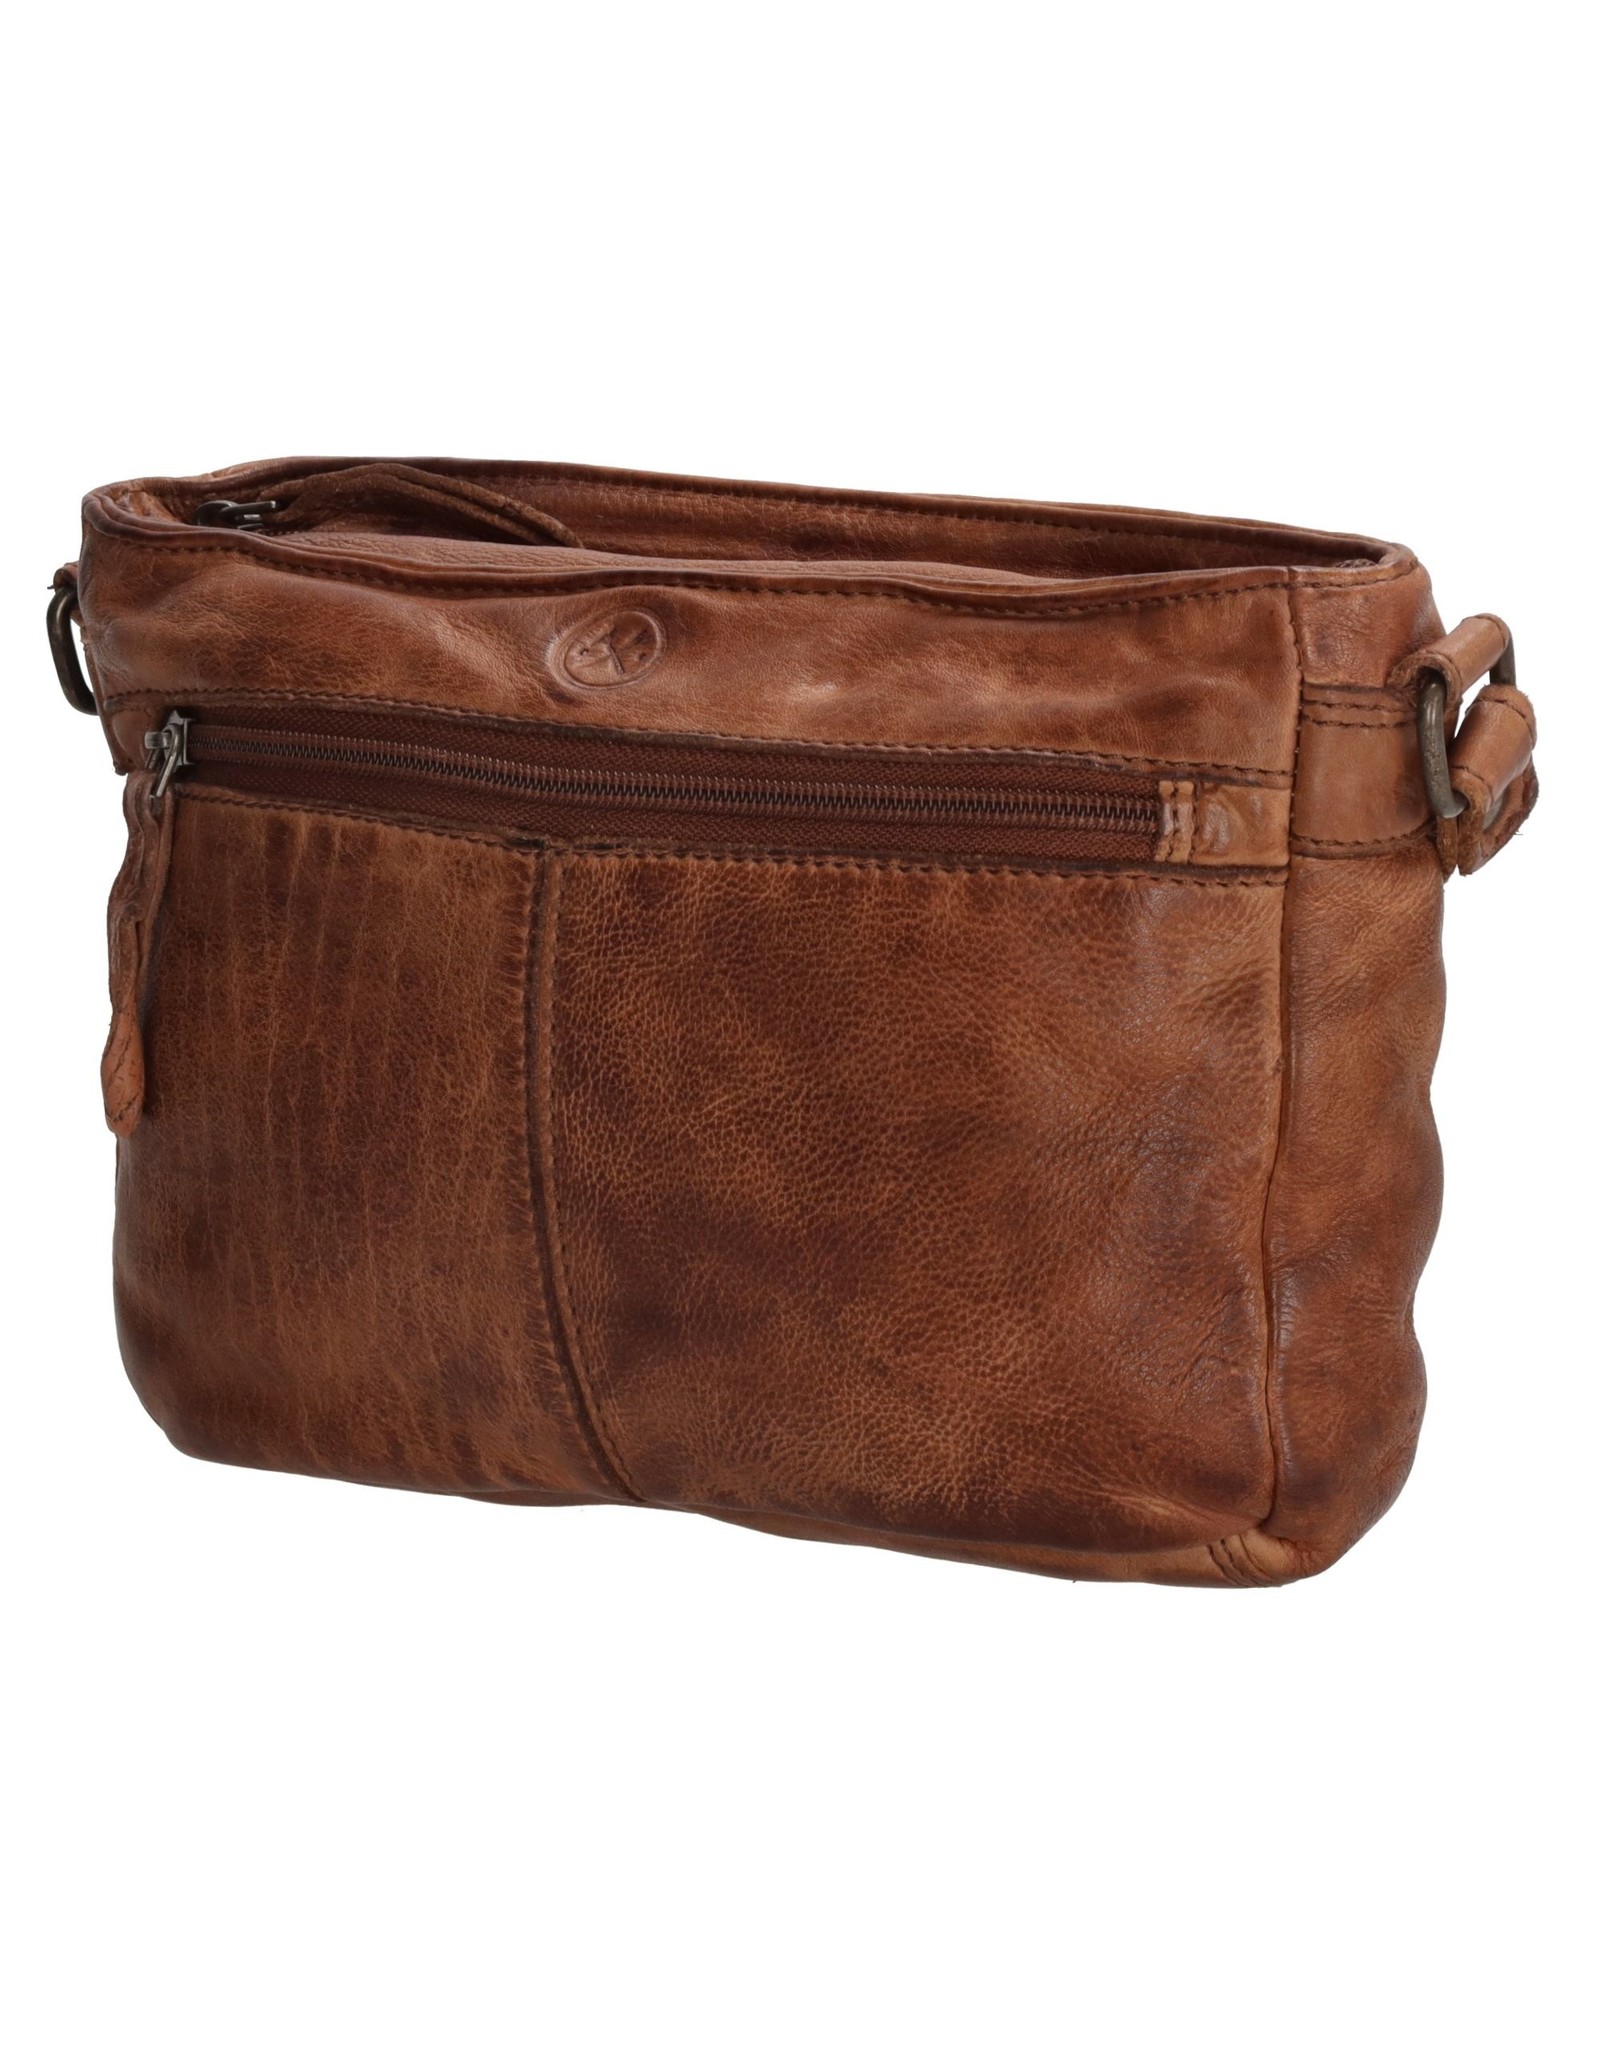 Hide & Stitches Leather Shoulder bags  leather crossbody bags - Hide & Stitches Paint Rock Shoulder Bag  Cognac